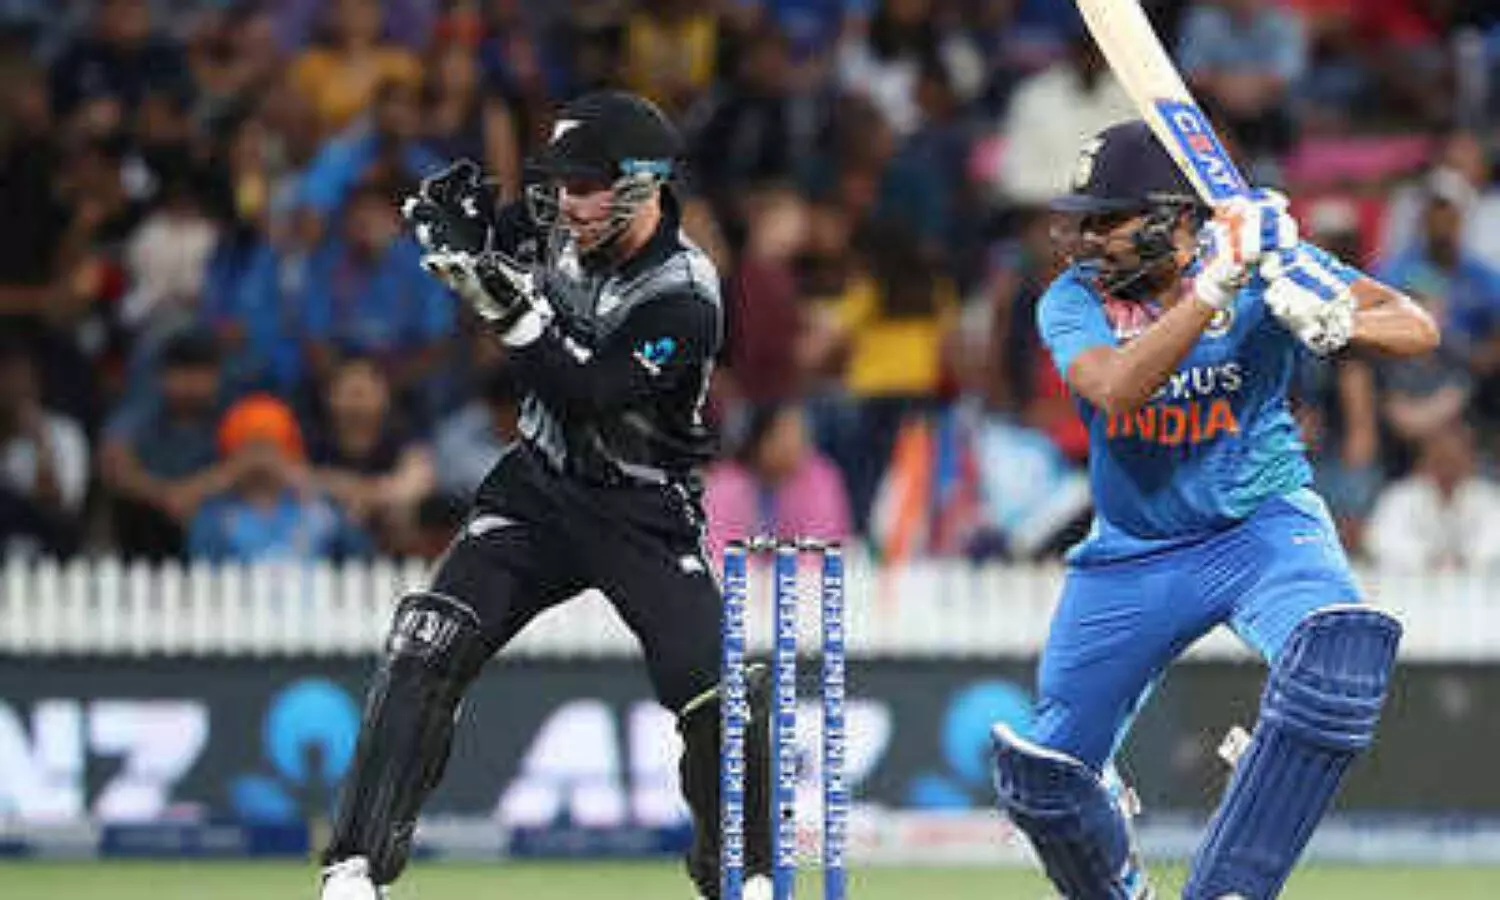 India New Zealand International Test Cricket: